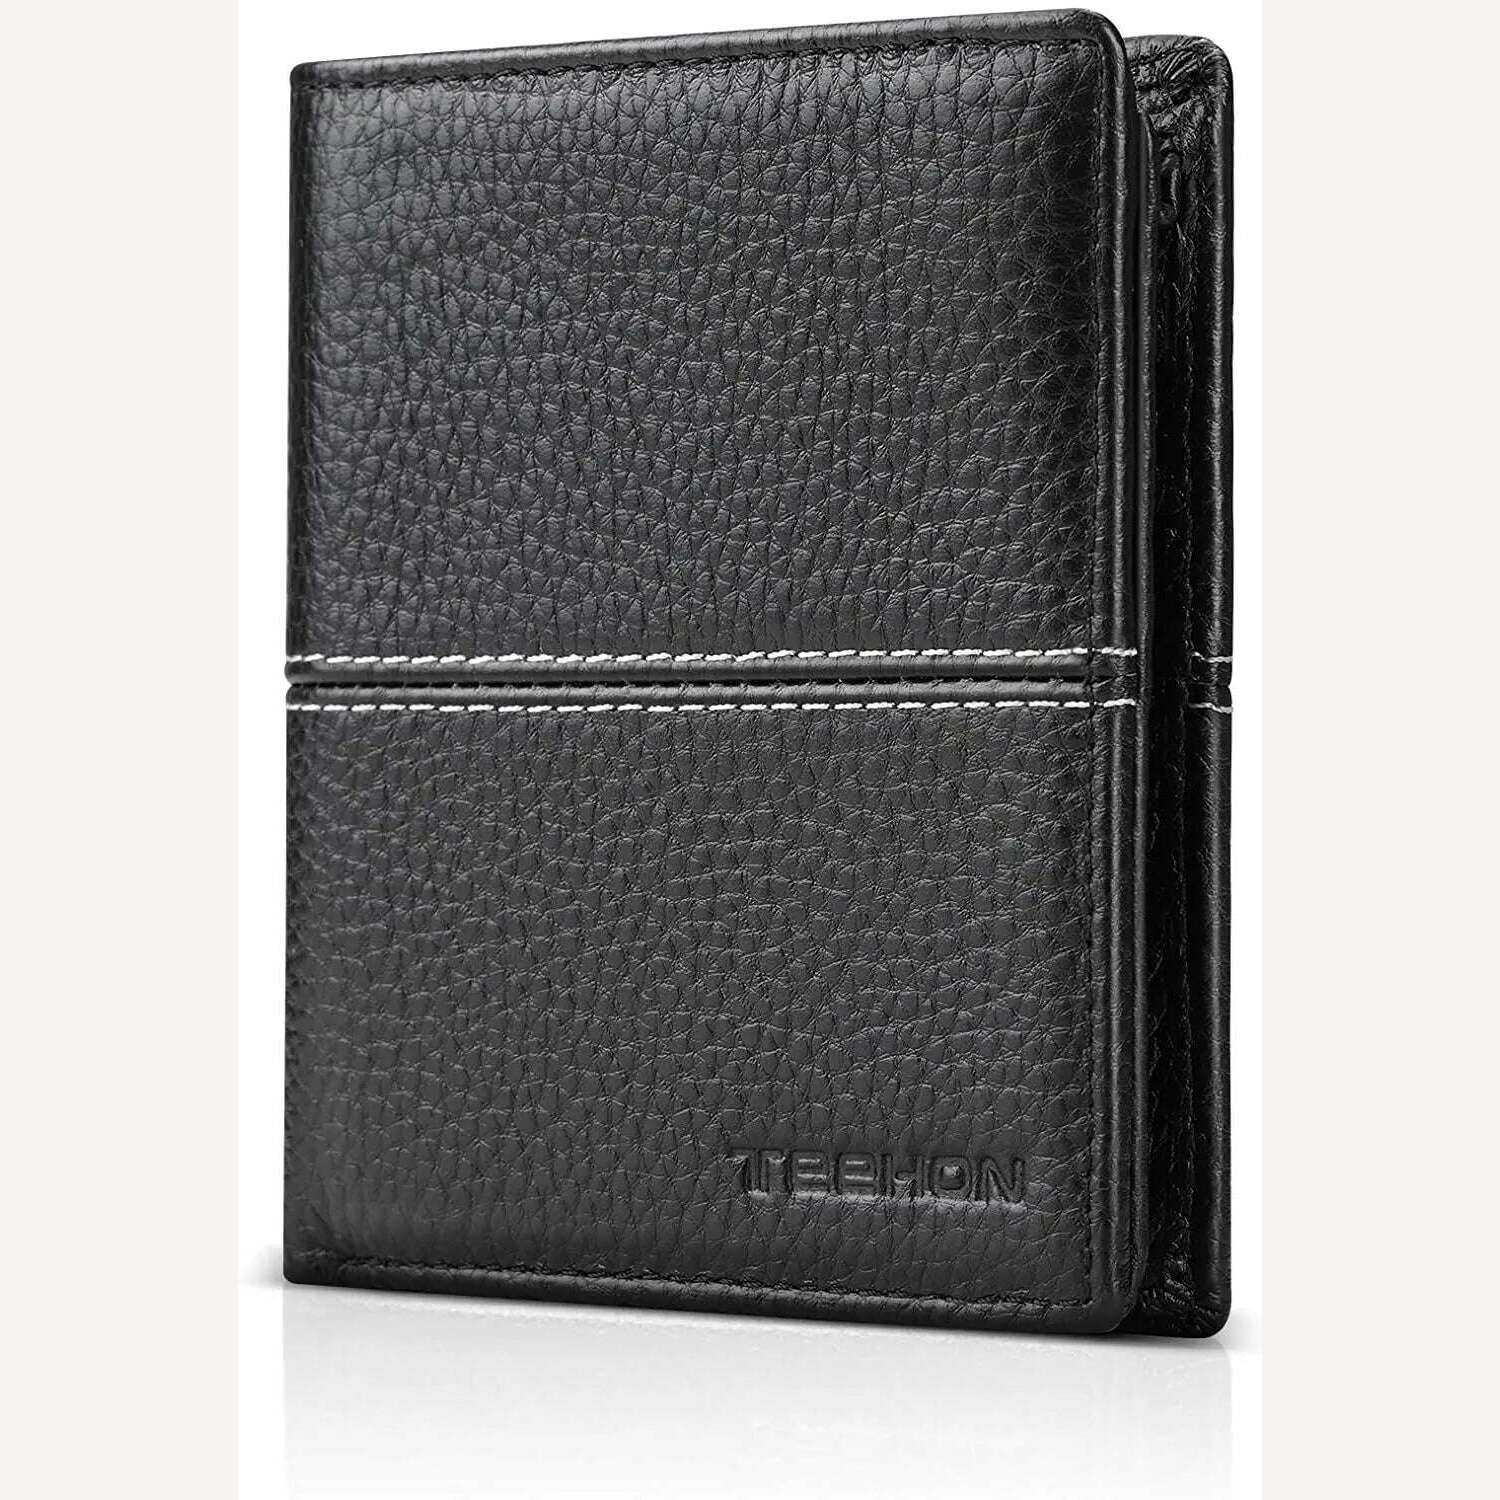 KIMLUD, TEEHON Casual Soft Genuine Leather Wallet Men RFID Black Purse Coin Card Holder, Black, KIMLUD Womens Clothes